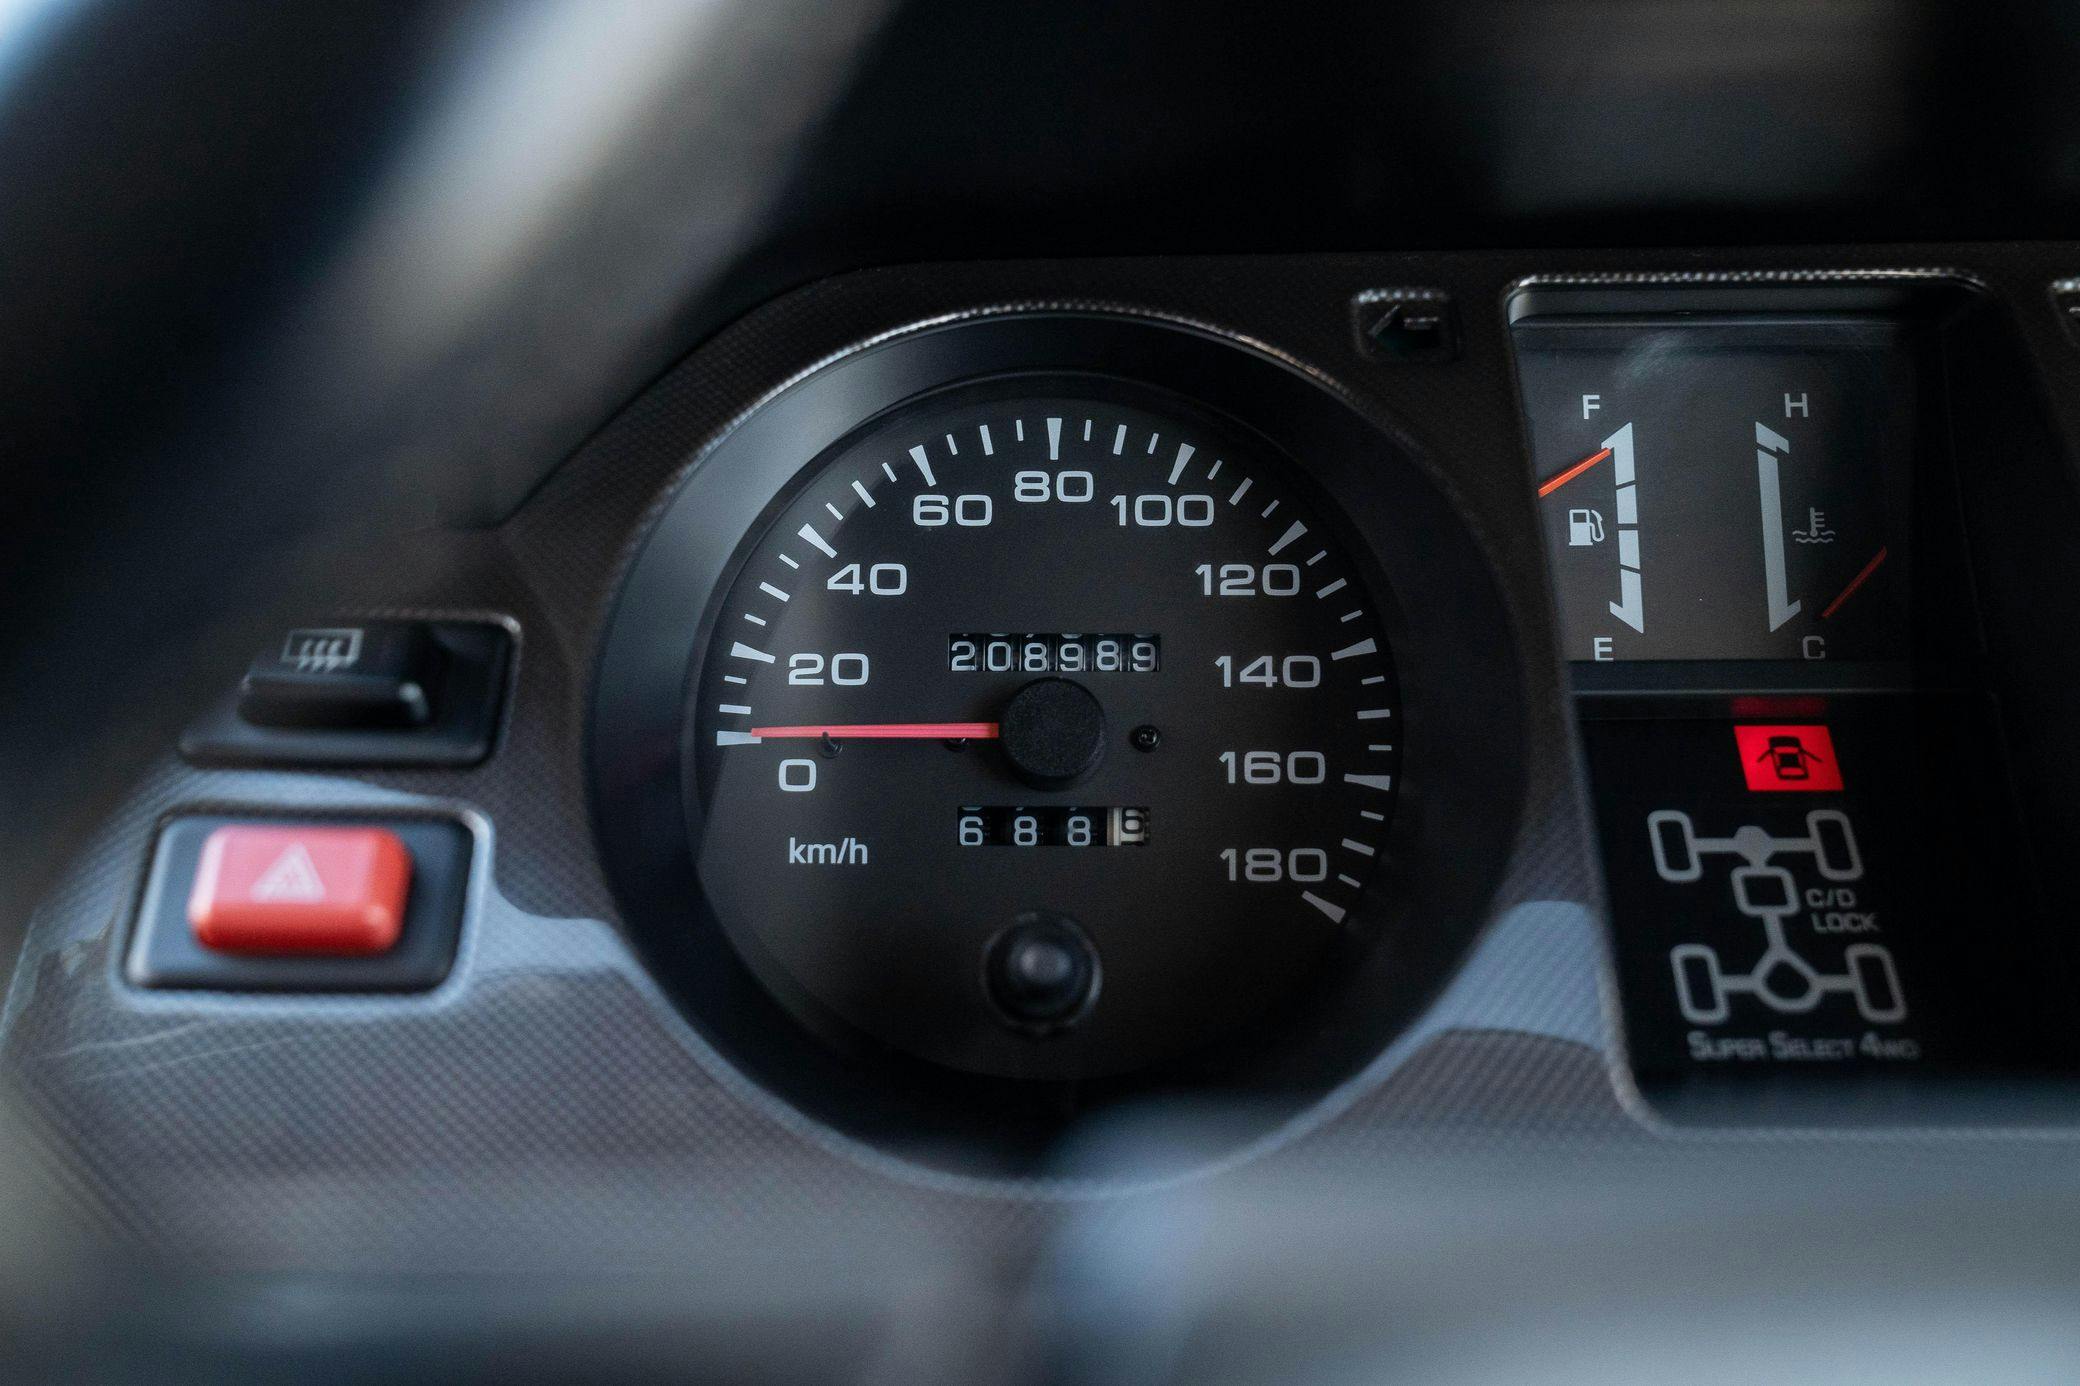 1997 Mitsubishi Pajero Evolution interior odometer and gauge cluster